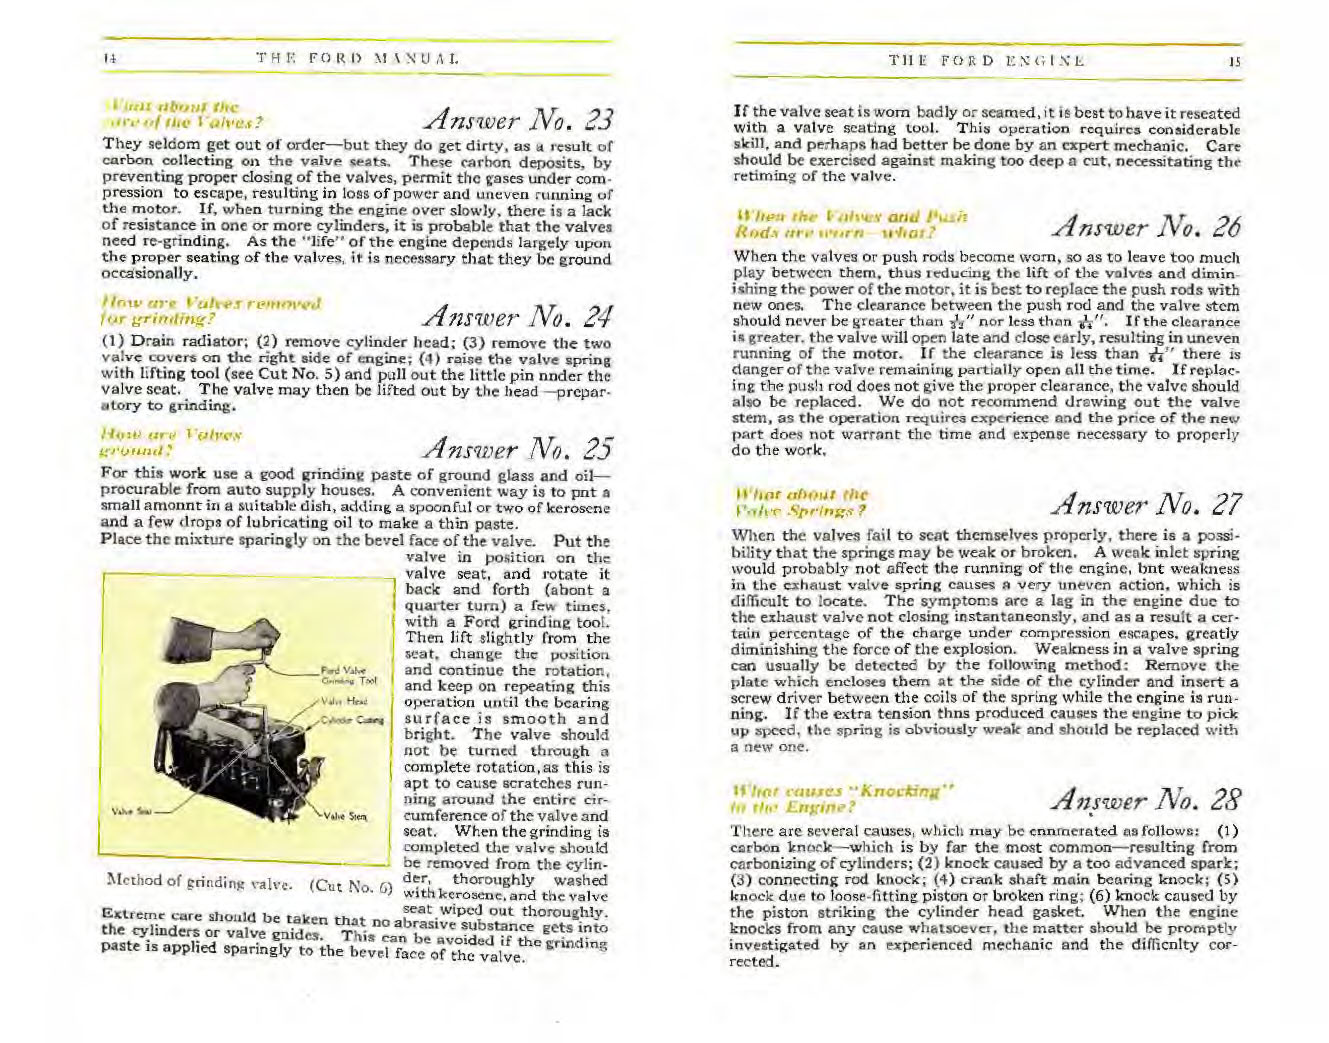 n_1917 Ford Owners Manual-14-15.jpg